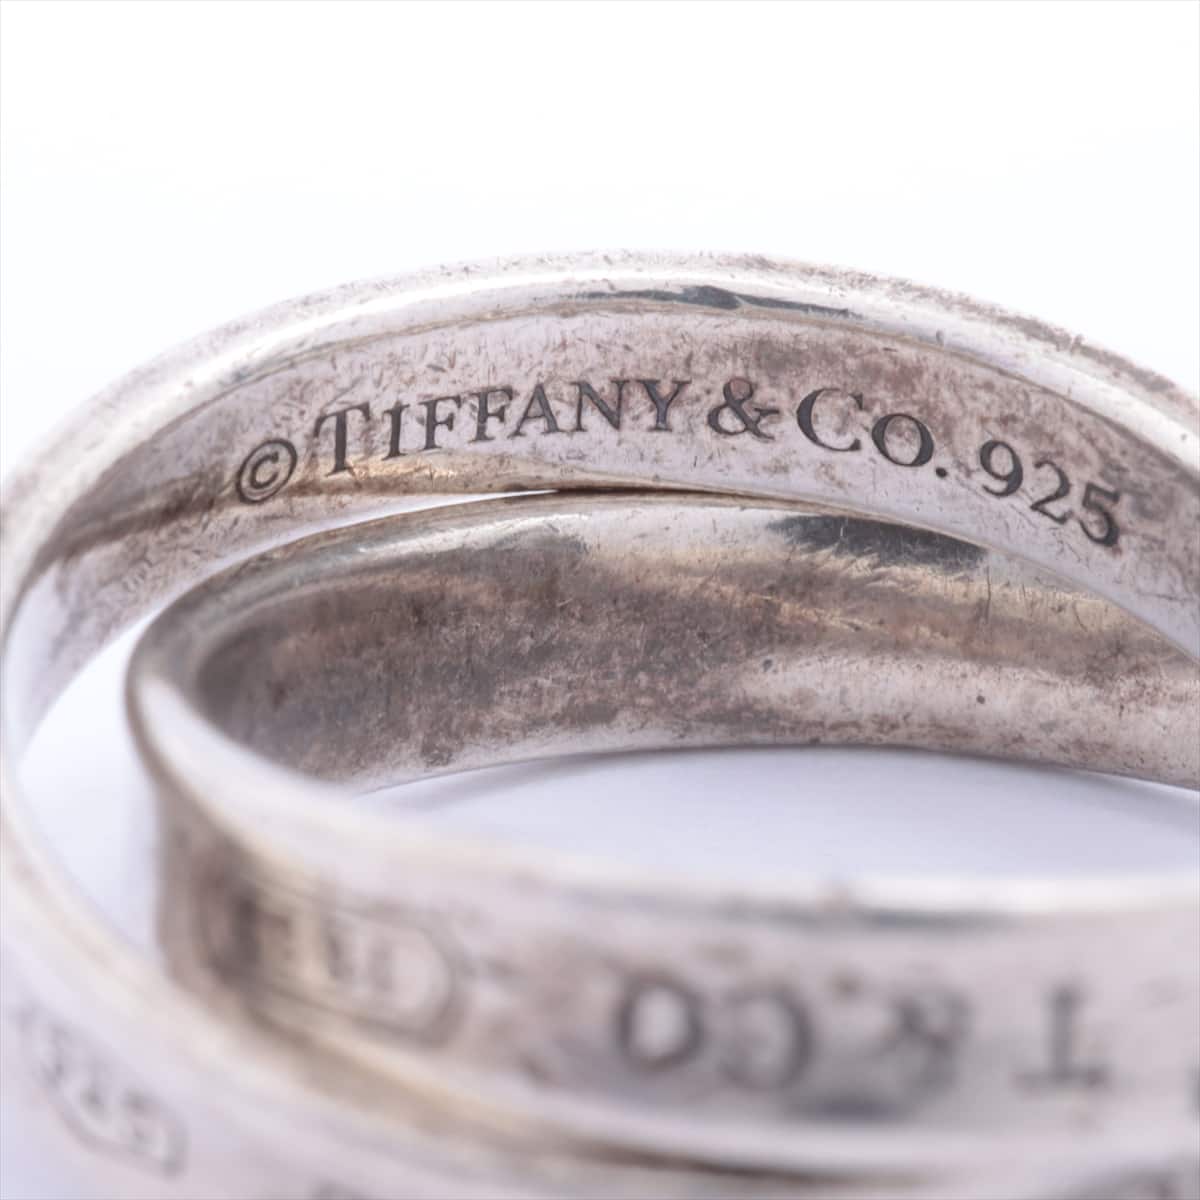 Tiffany 1837 Interlocking Circle rings 925 4.9g Silver